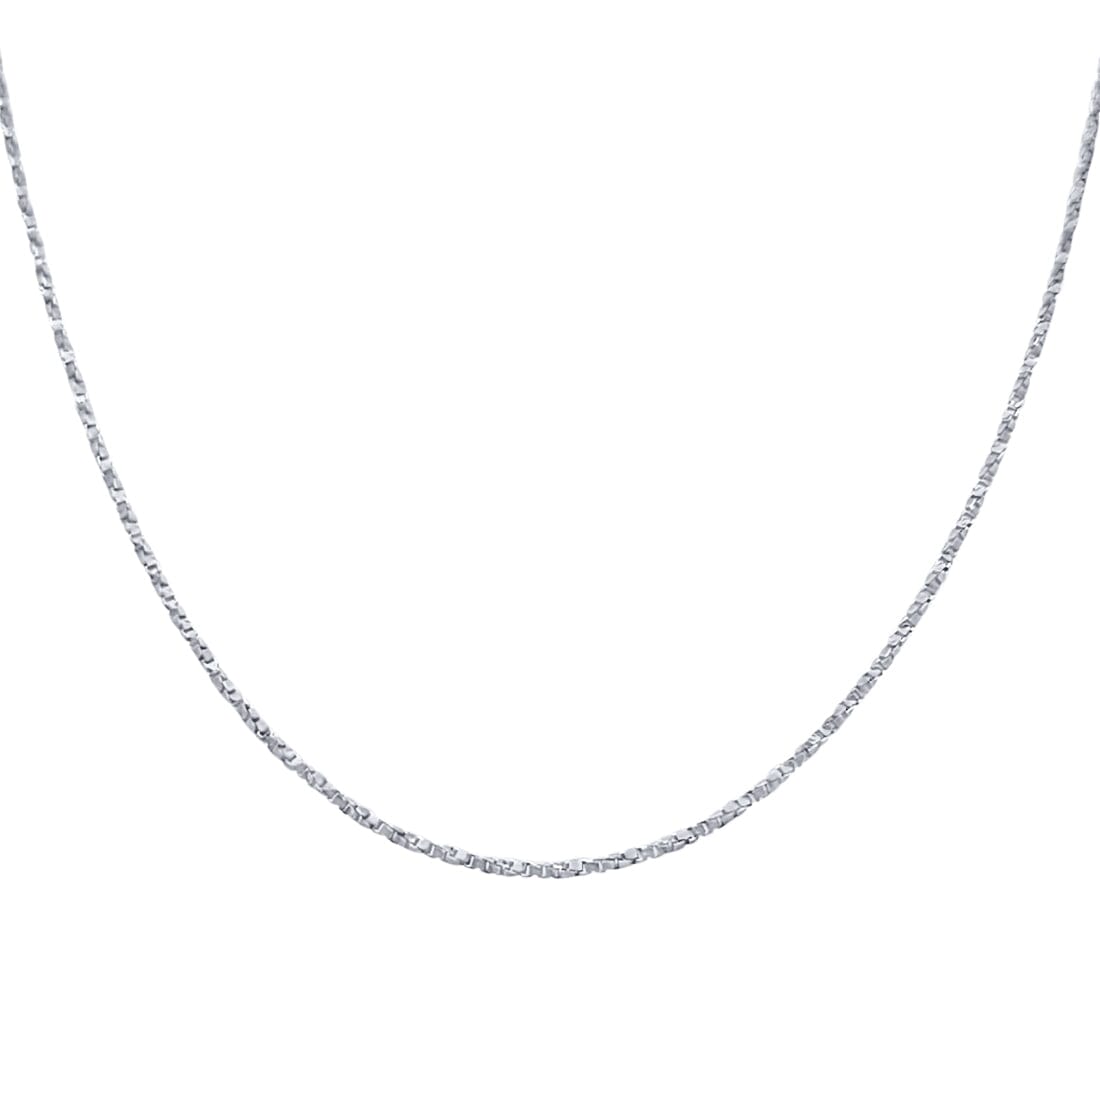 45cm Diamond Cut Box Necklace in 9ct White Gold Necklaces Bevilles 